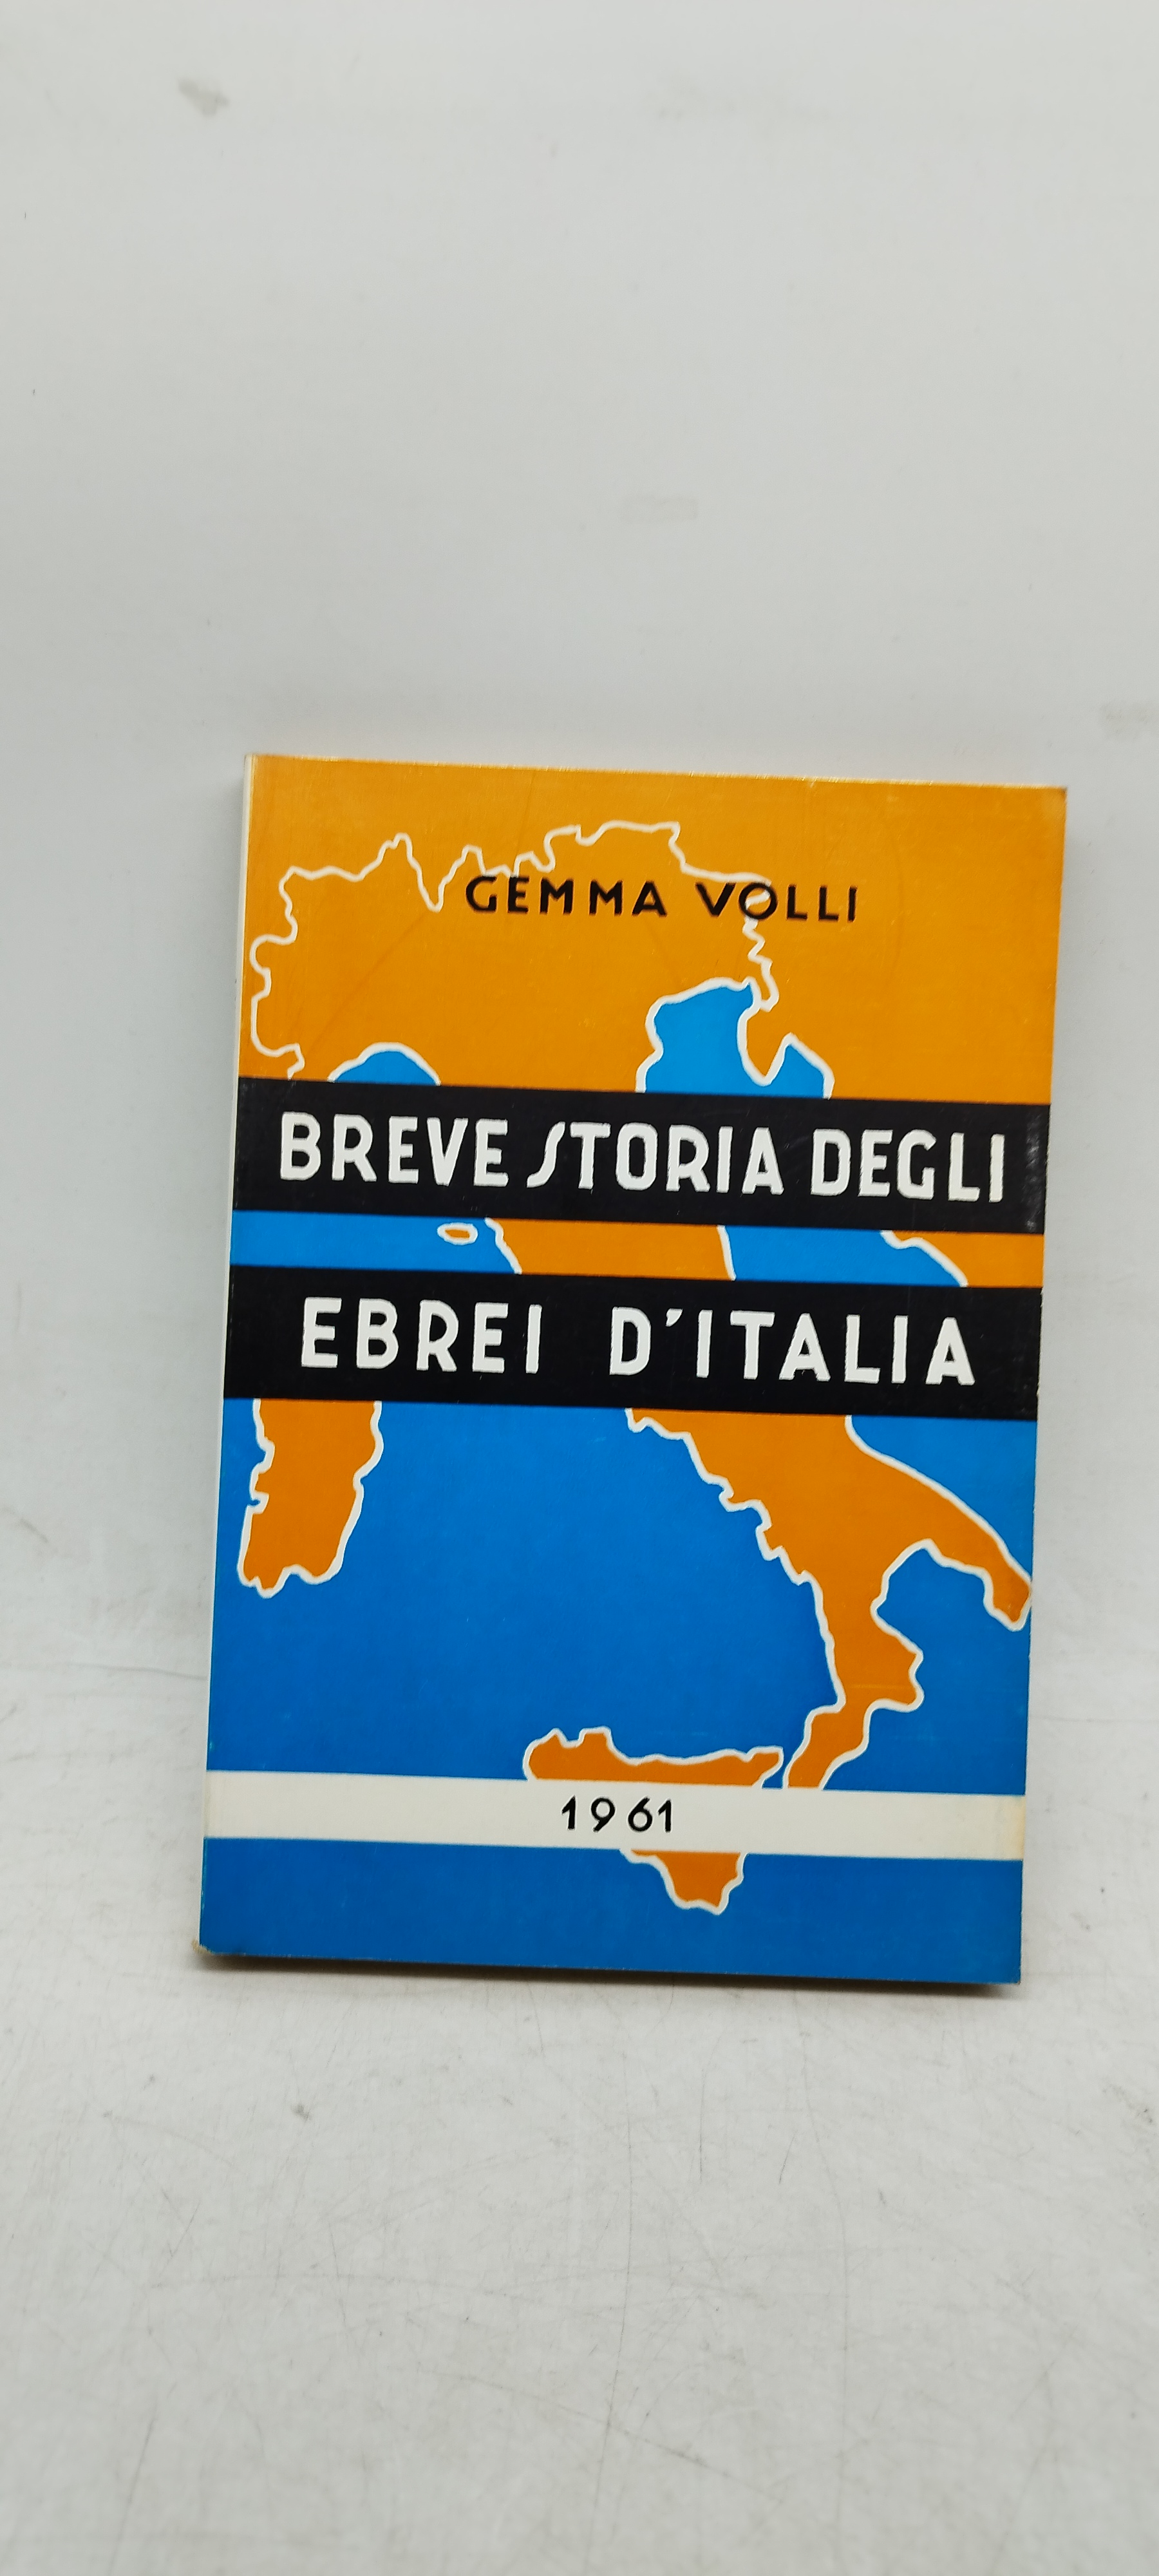 gemma volli breve storia degli ebrei d'italia 1961